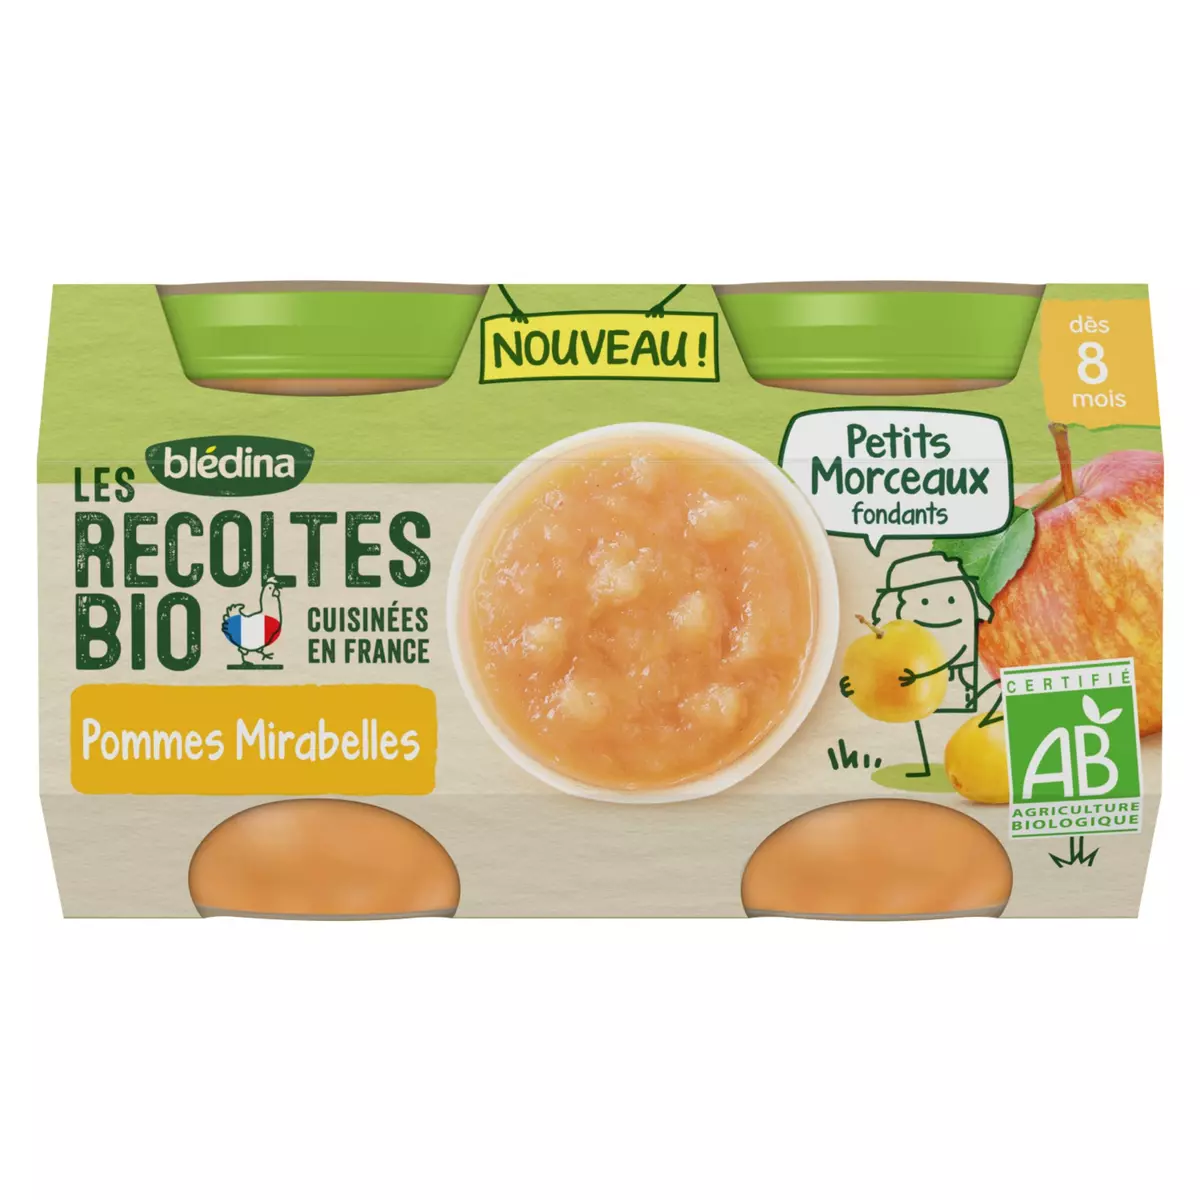 BLEDINA Petit pot dessert pommes mirabelles bio dès 8 mois 2x130g